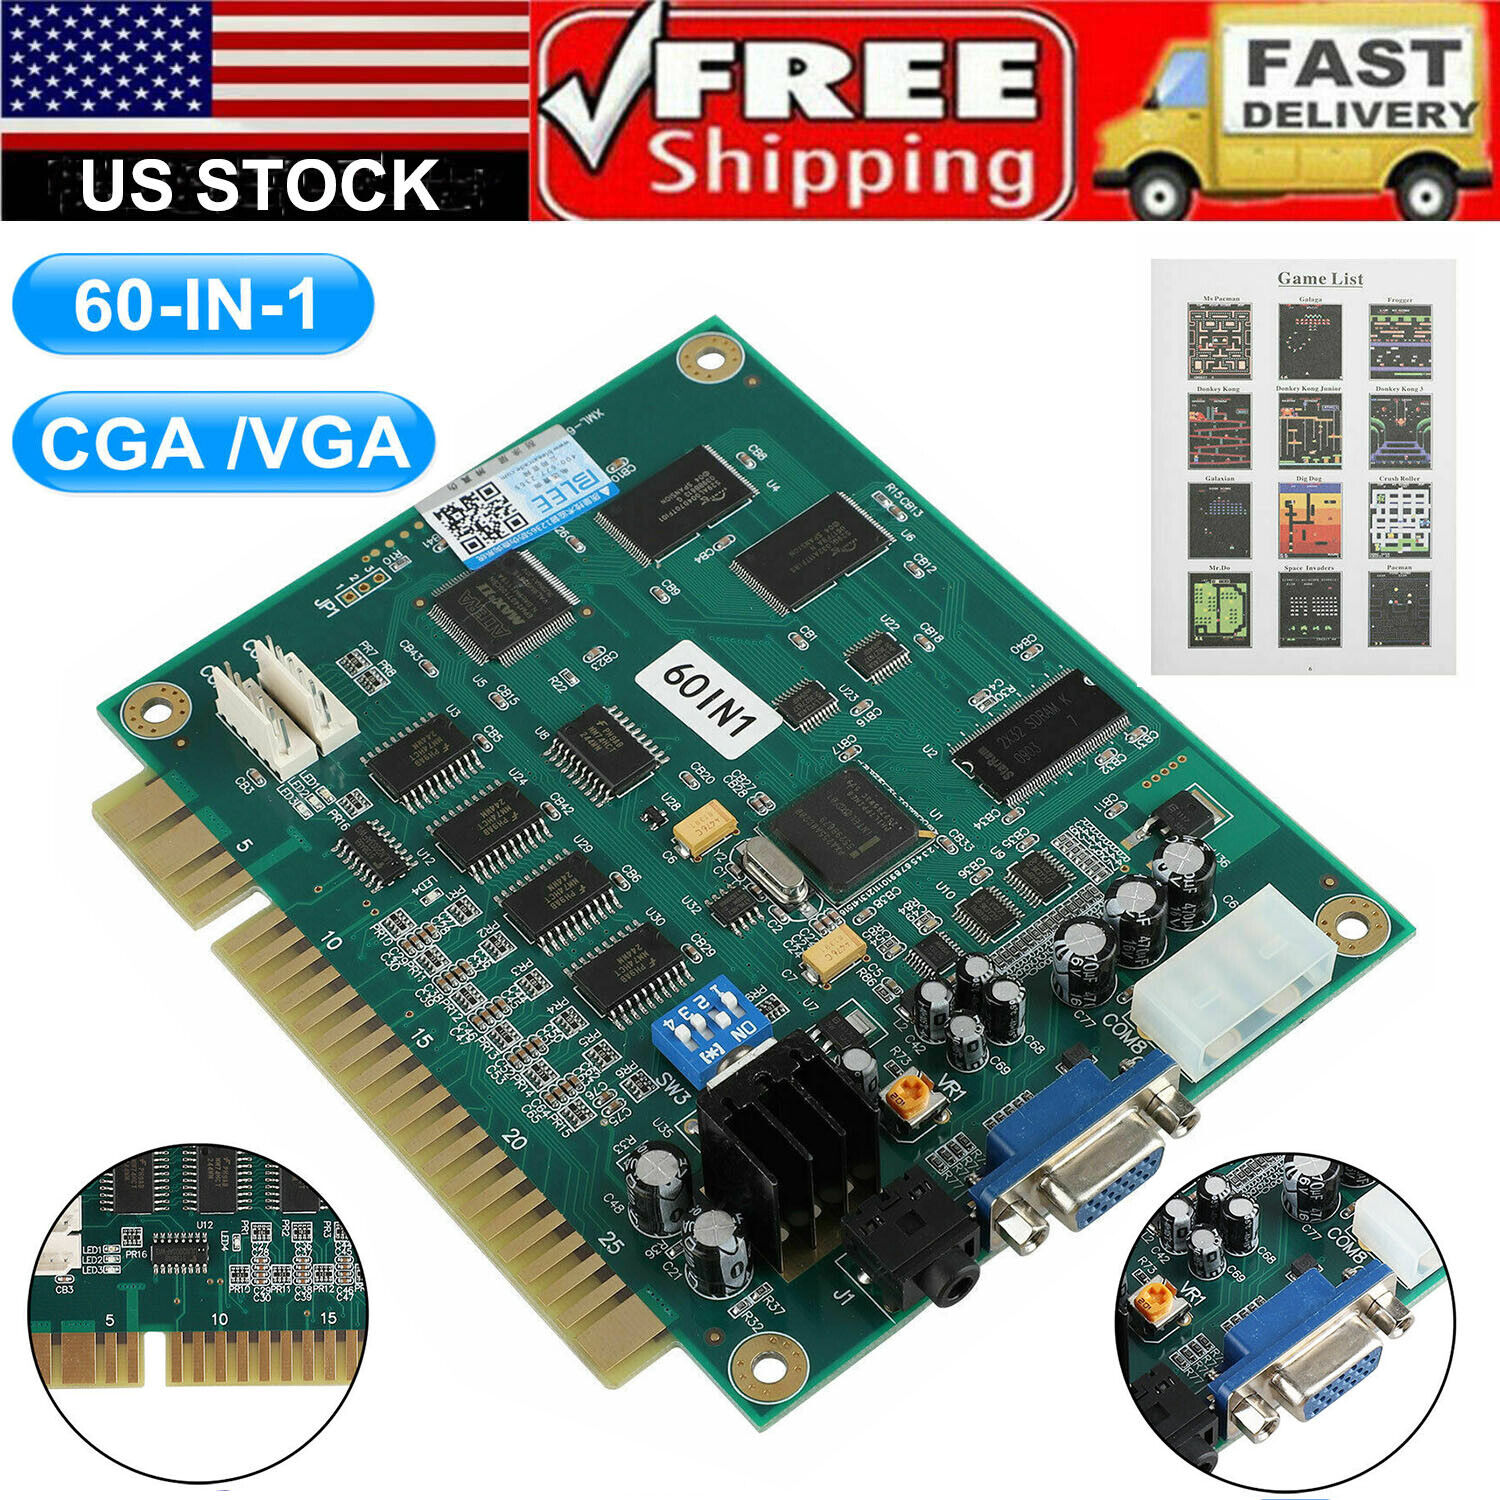 60 In 1 Multicade PCB Board VGA / CGA Output for Classic Jamma Arcade Video Game